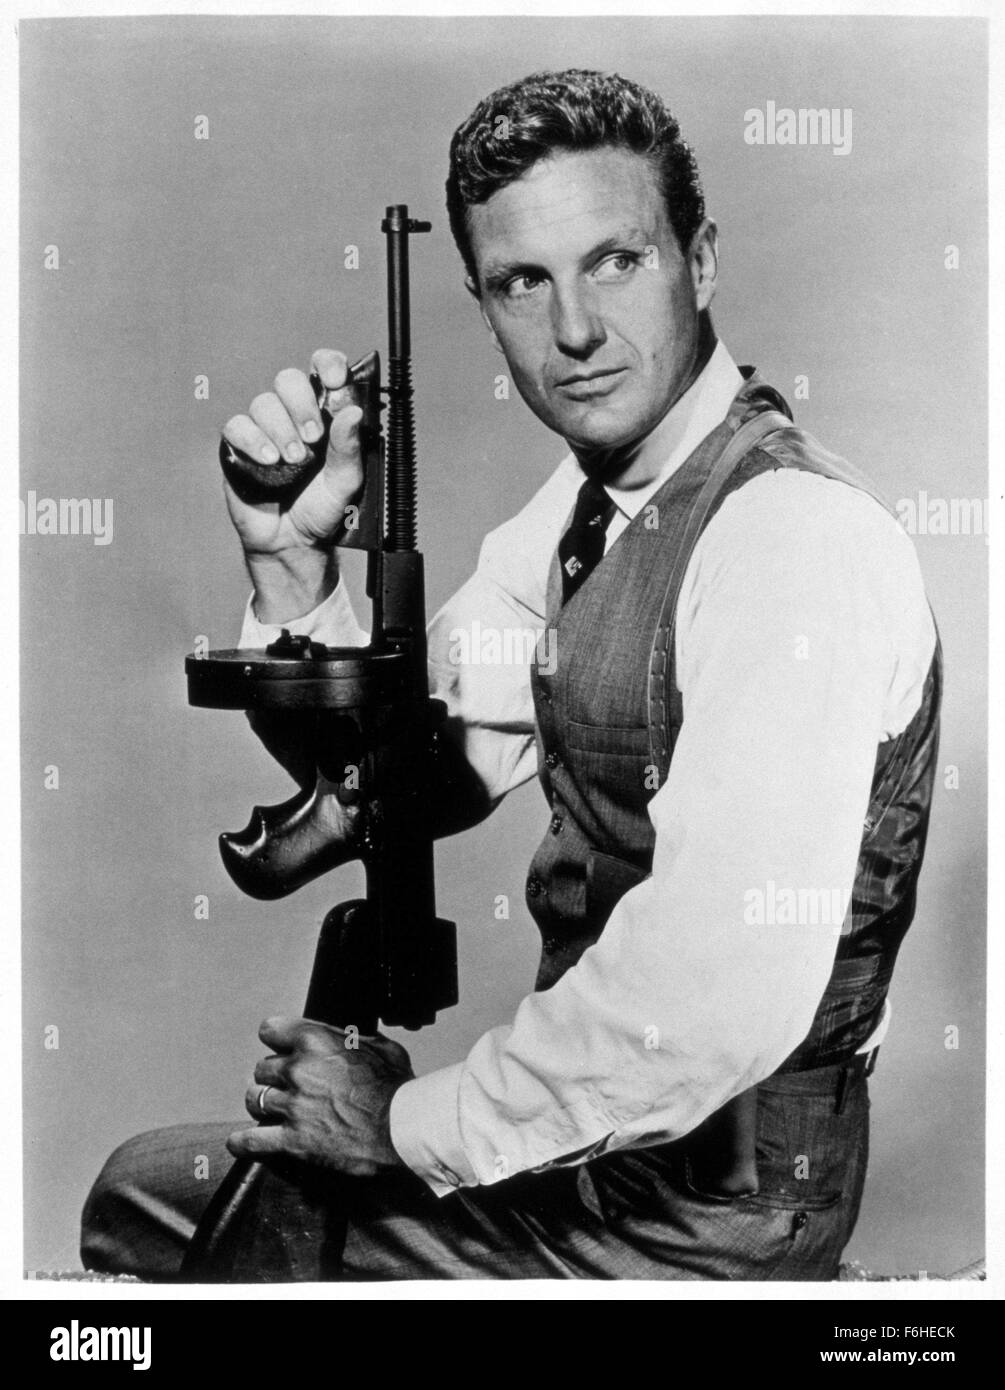 1961, Film Title: UNTOUCHABLES, Studio: ABC, Pictured: GUN CRAZY, HAND GUN, ROBERT STACK, WEAPONS, TOUGH GUY, WAIST COAT. (Credit Image: SNAP) (Credit Image: c SNAP/Entertainment Pictures) Stock Photo